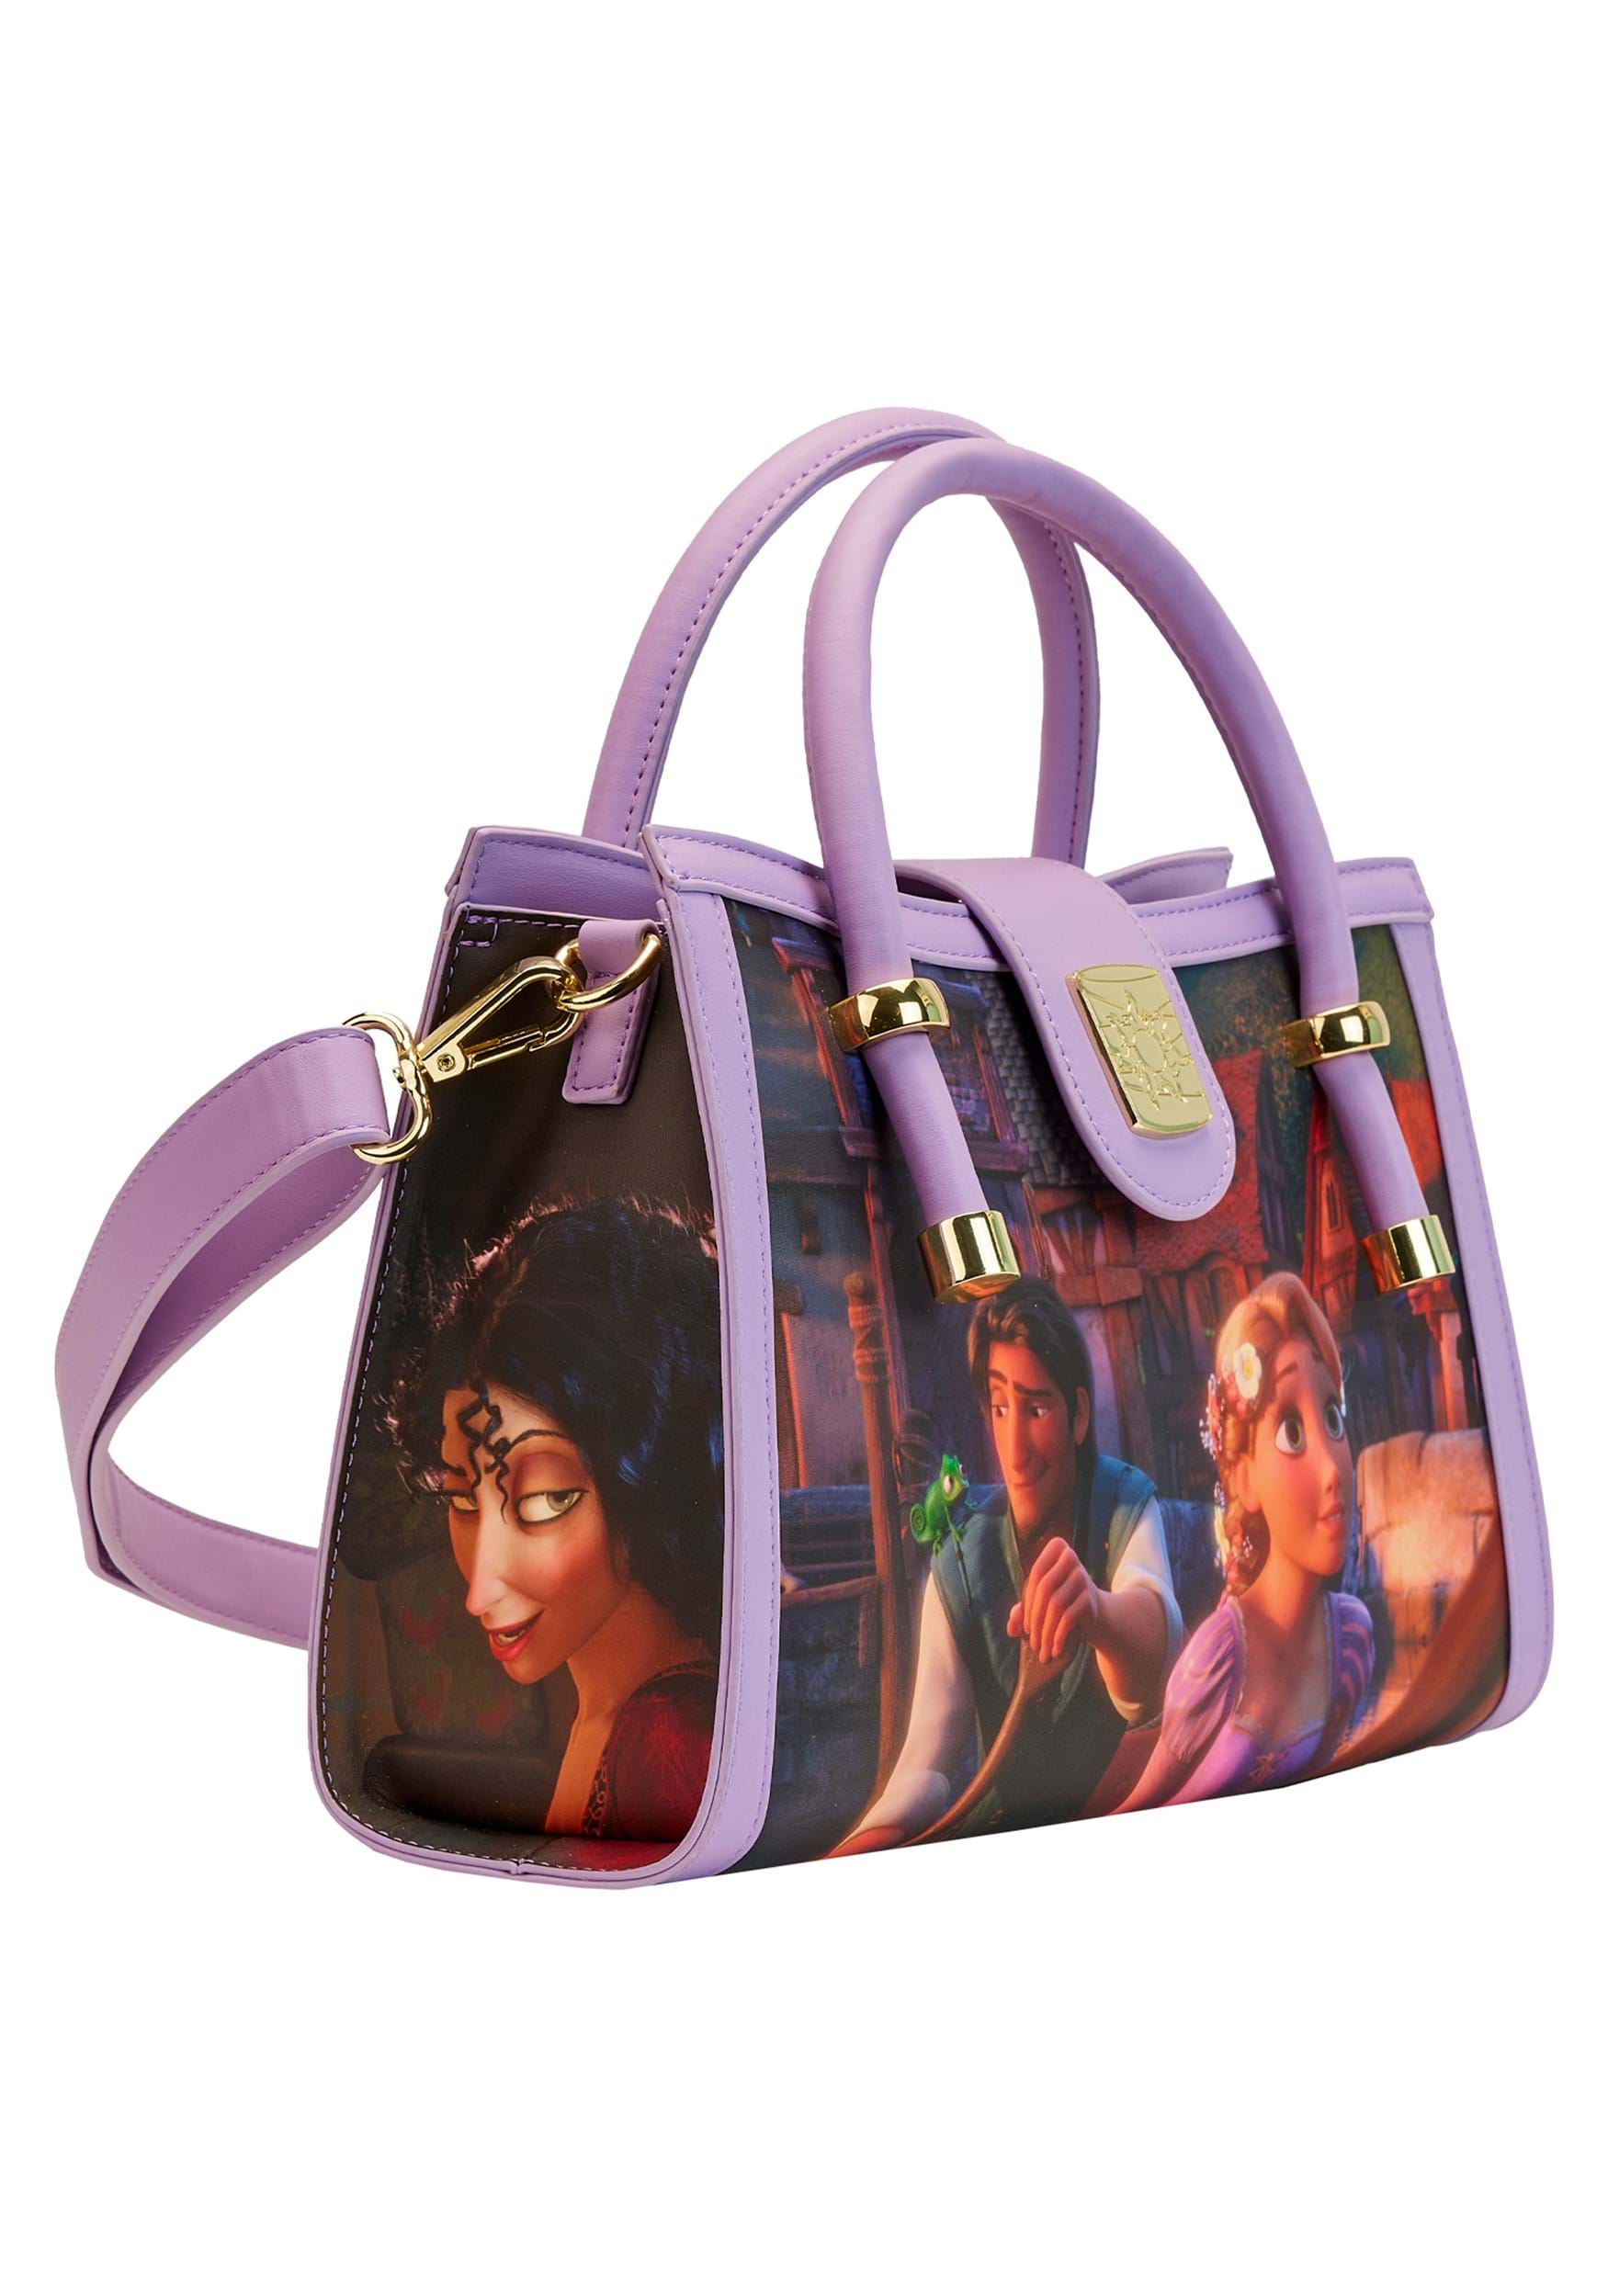 Disney Character Handbag Featuring Over 20 Characters - MickeyBlog.com